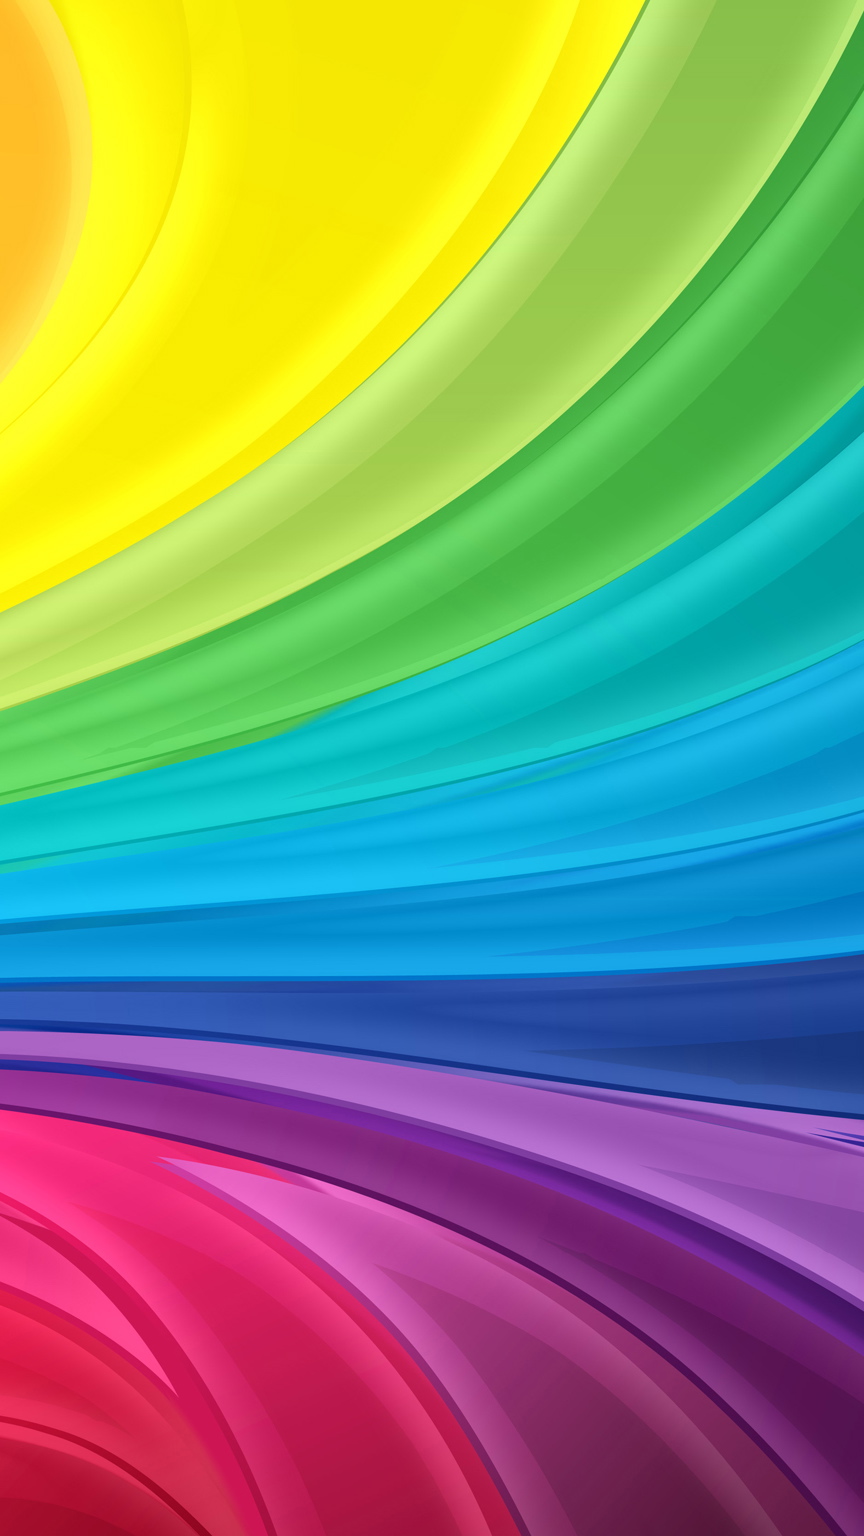 Rainbow Swirl iPhone Wallpaper Free Download